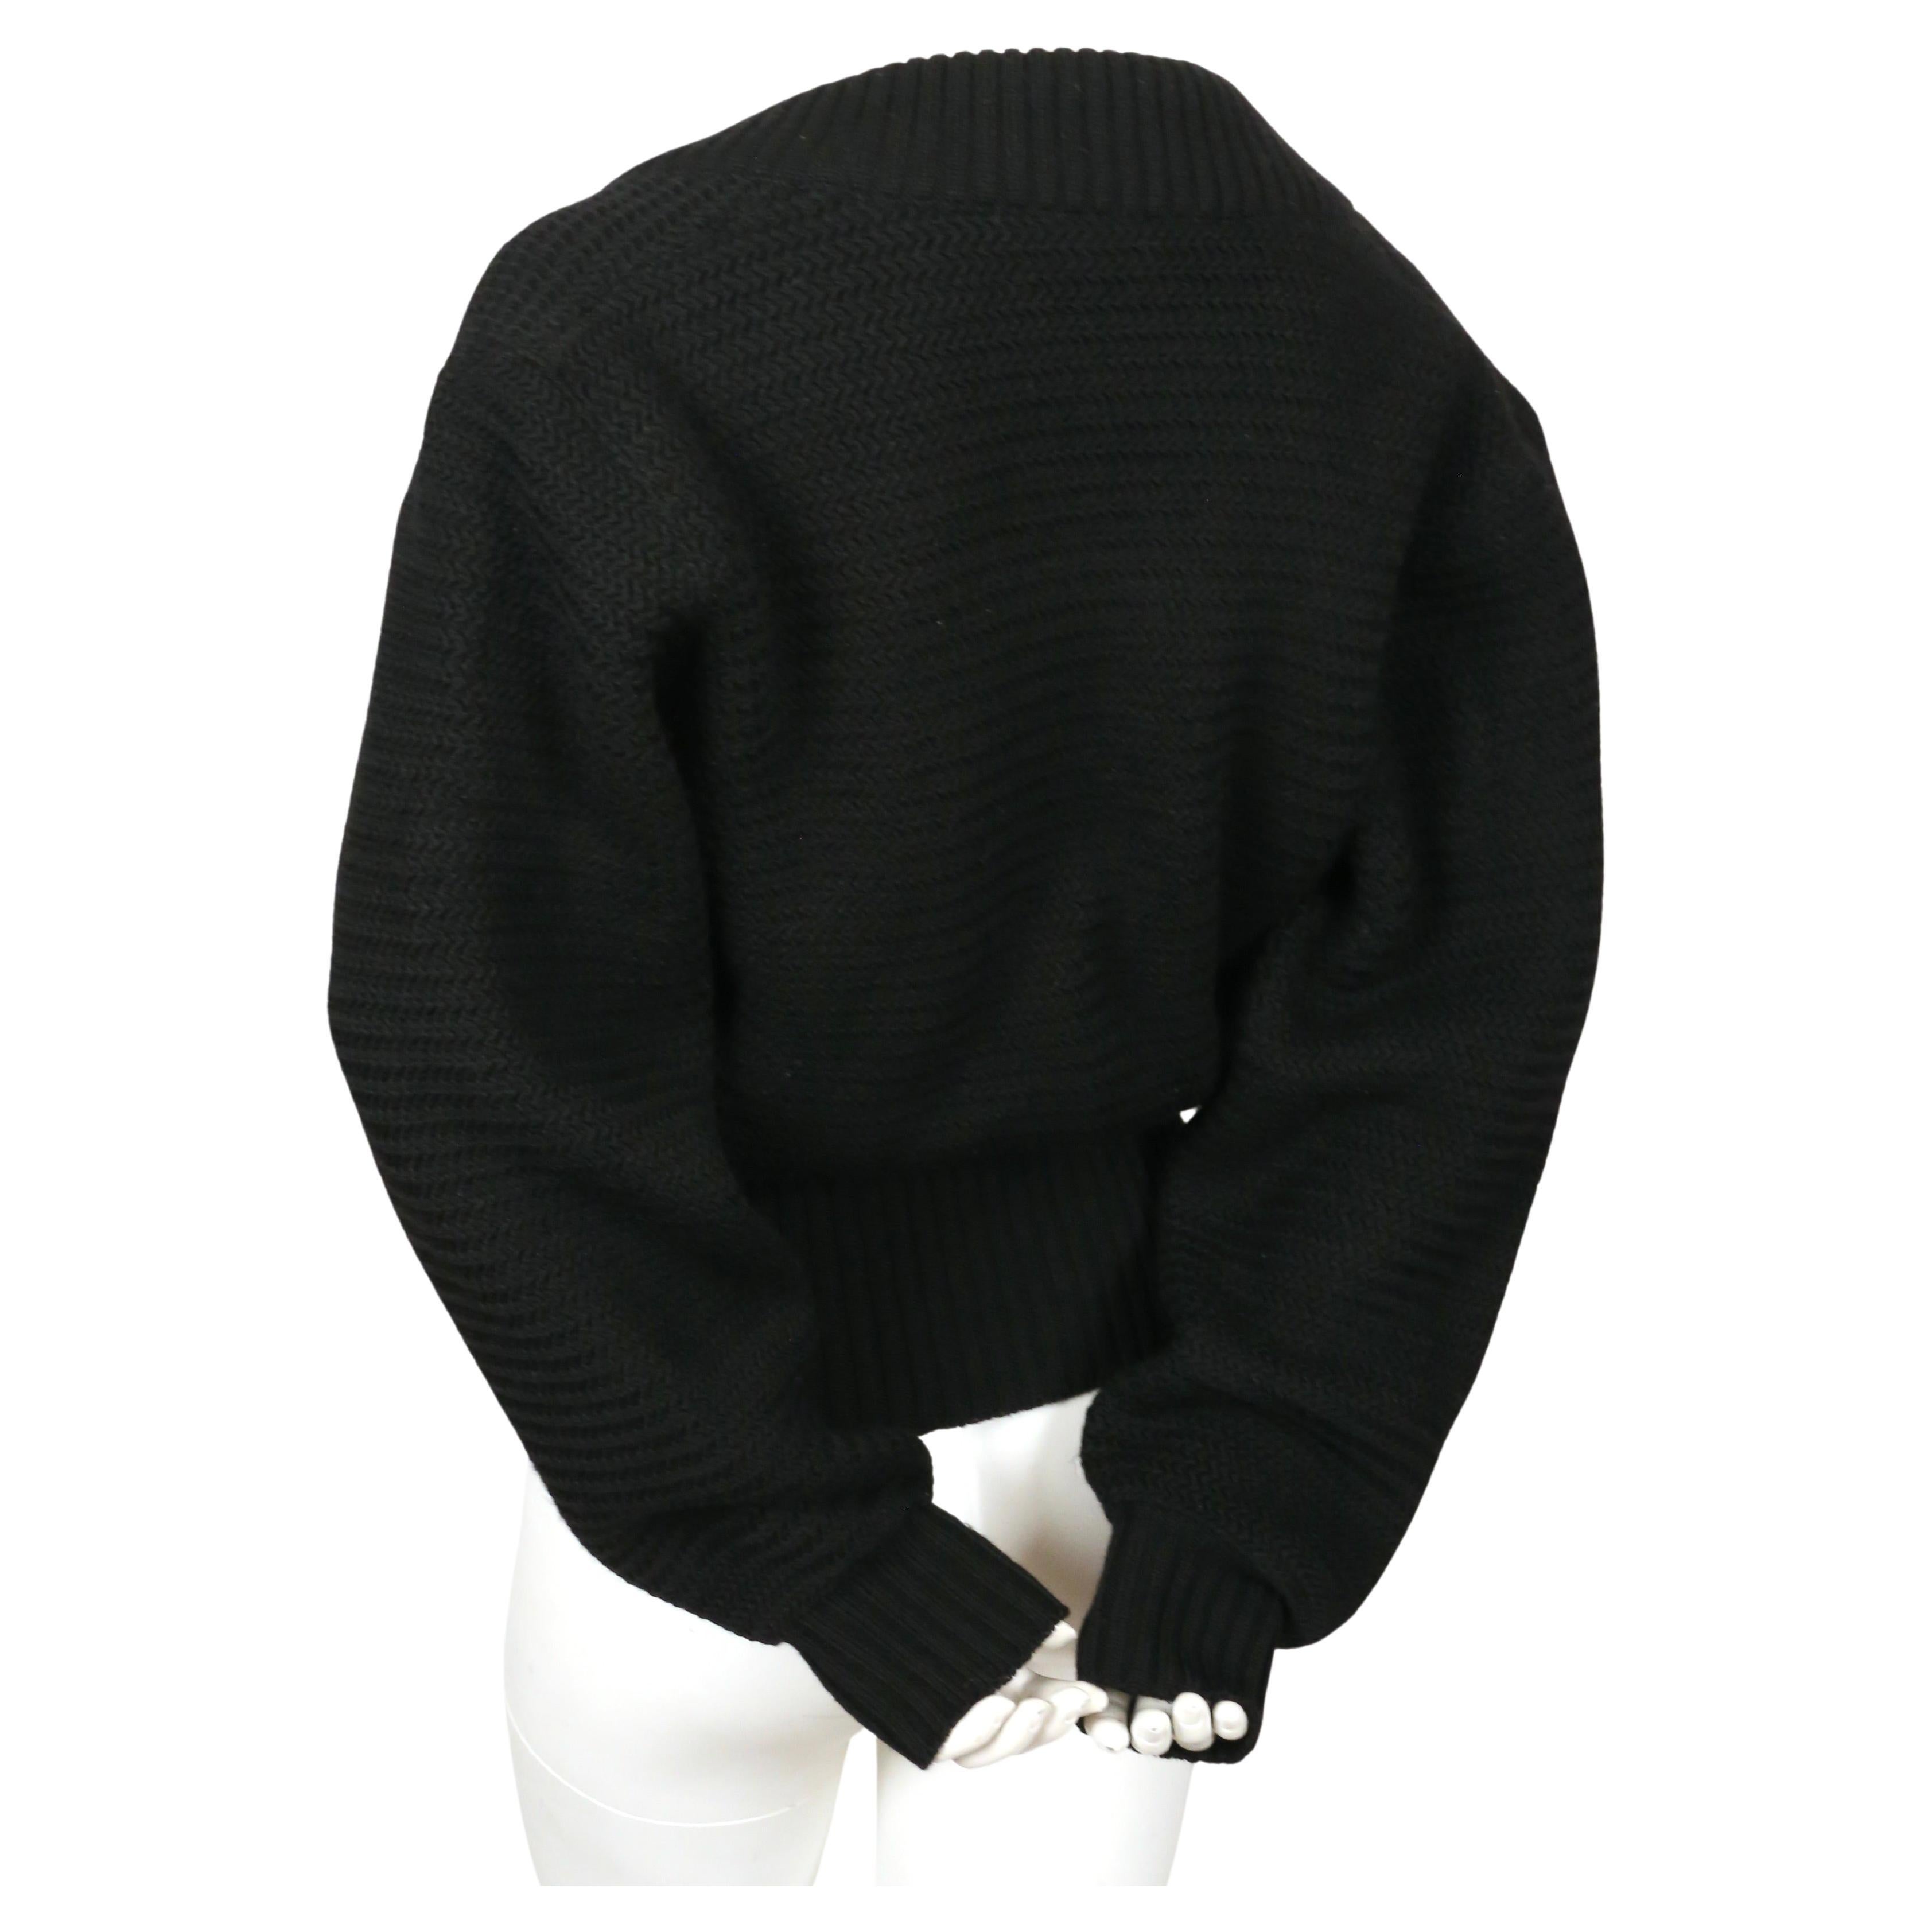 Women's or Men's 1986 AZZEDINE ALAIA heavy knit black RUNWAY cardigan sweater coat with zippers